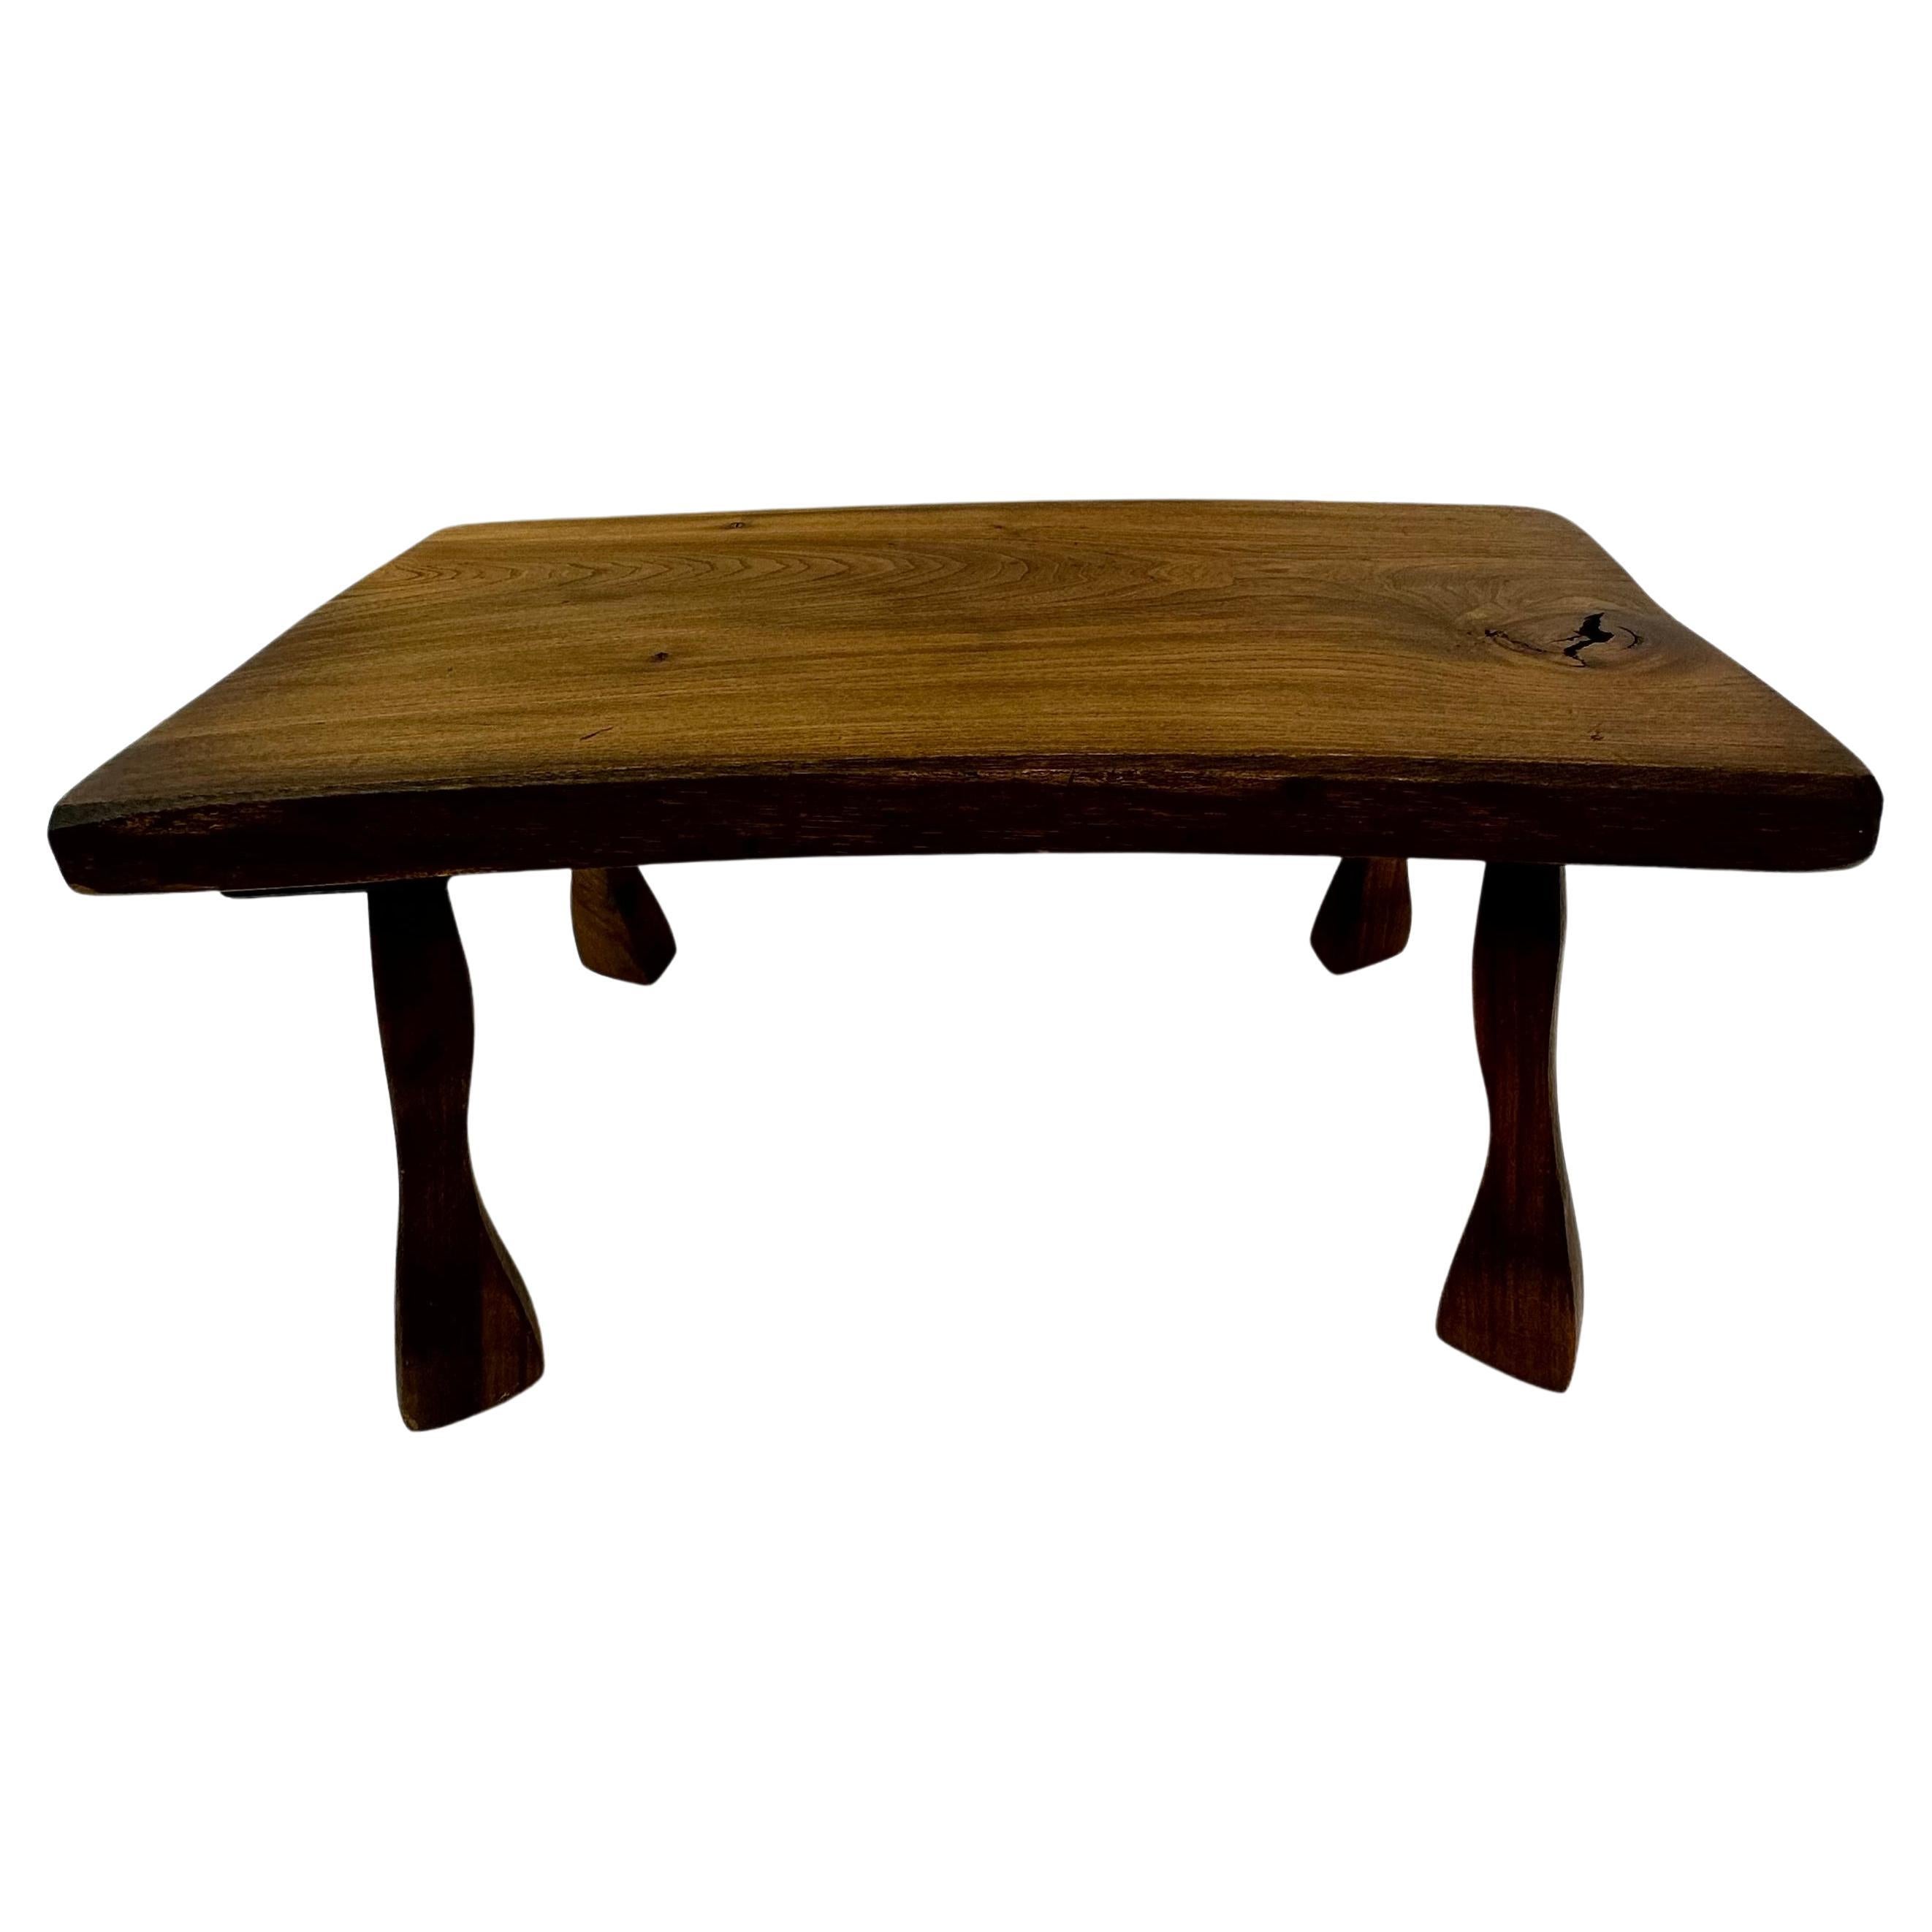 Brutalist solid wood side table, 1970’s